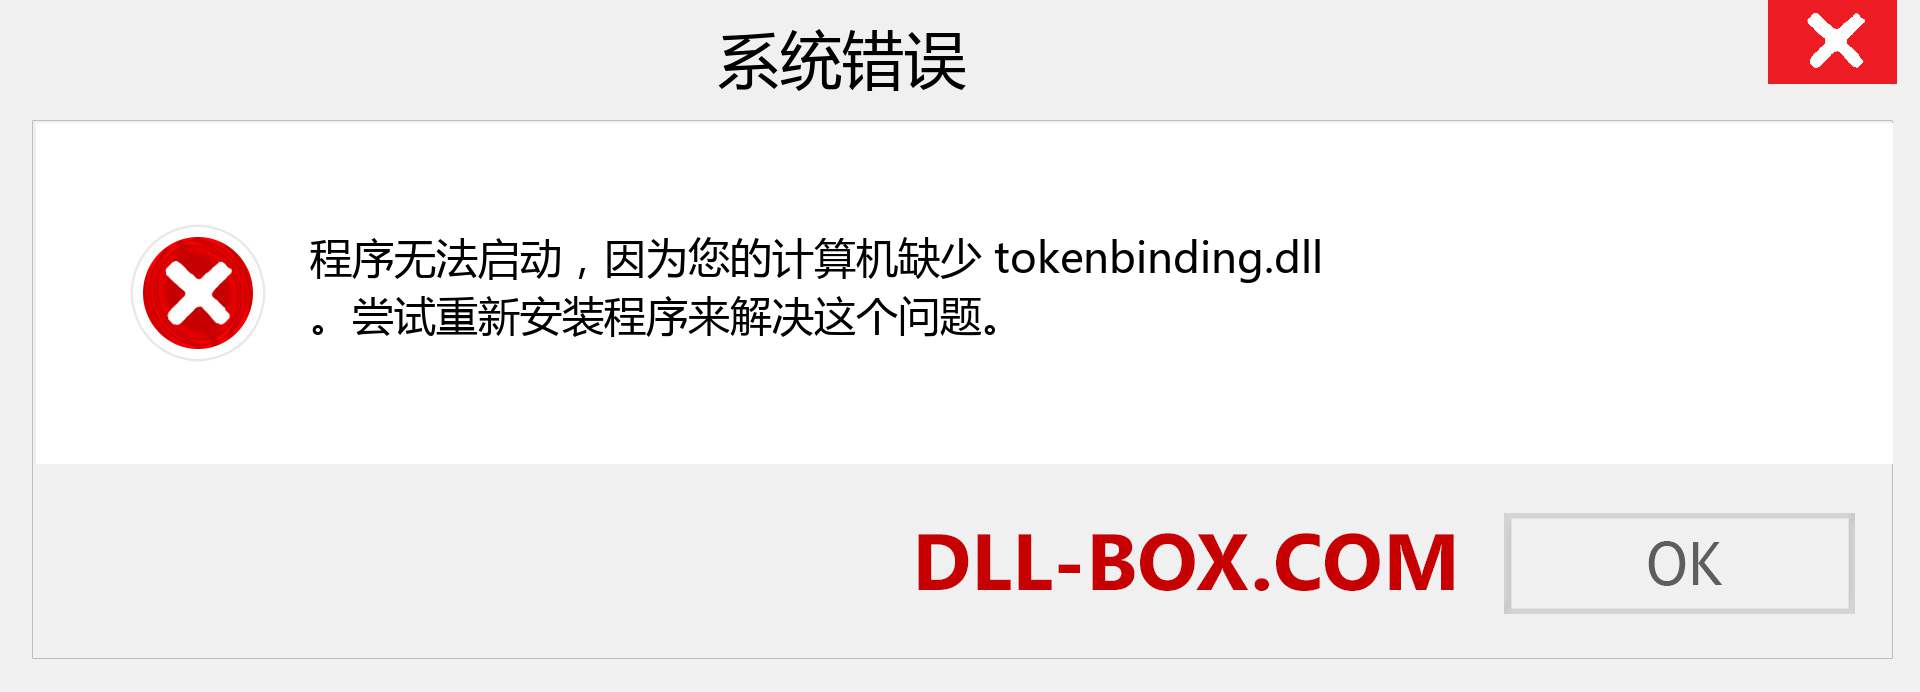 tokenbinding.dll 文件丢失？。 适用于 Windows 7、8、10 的下载 - 修复 Windows、照片、图像上的 tokenbinding dll 丢失错误